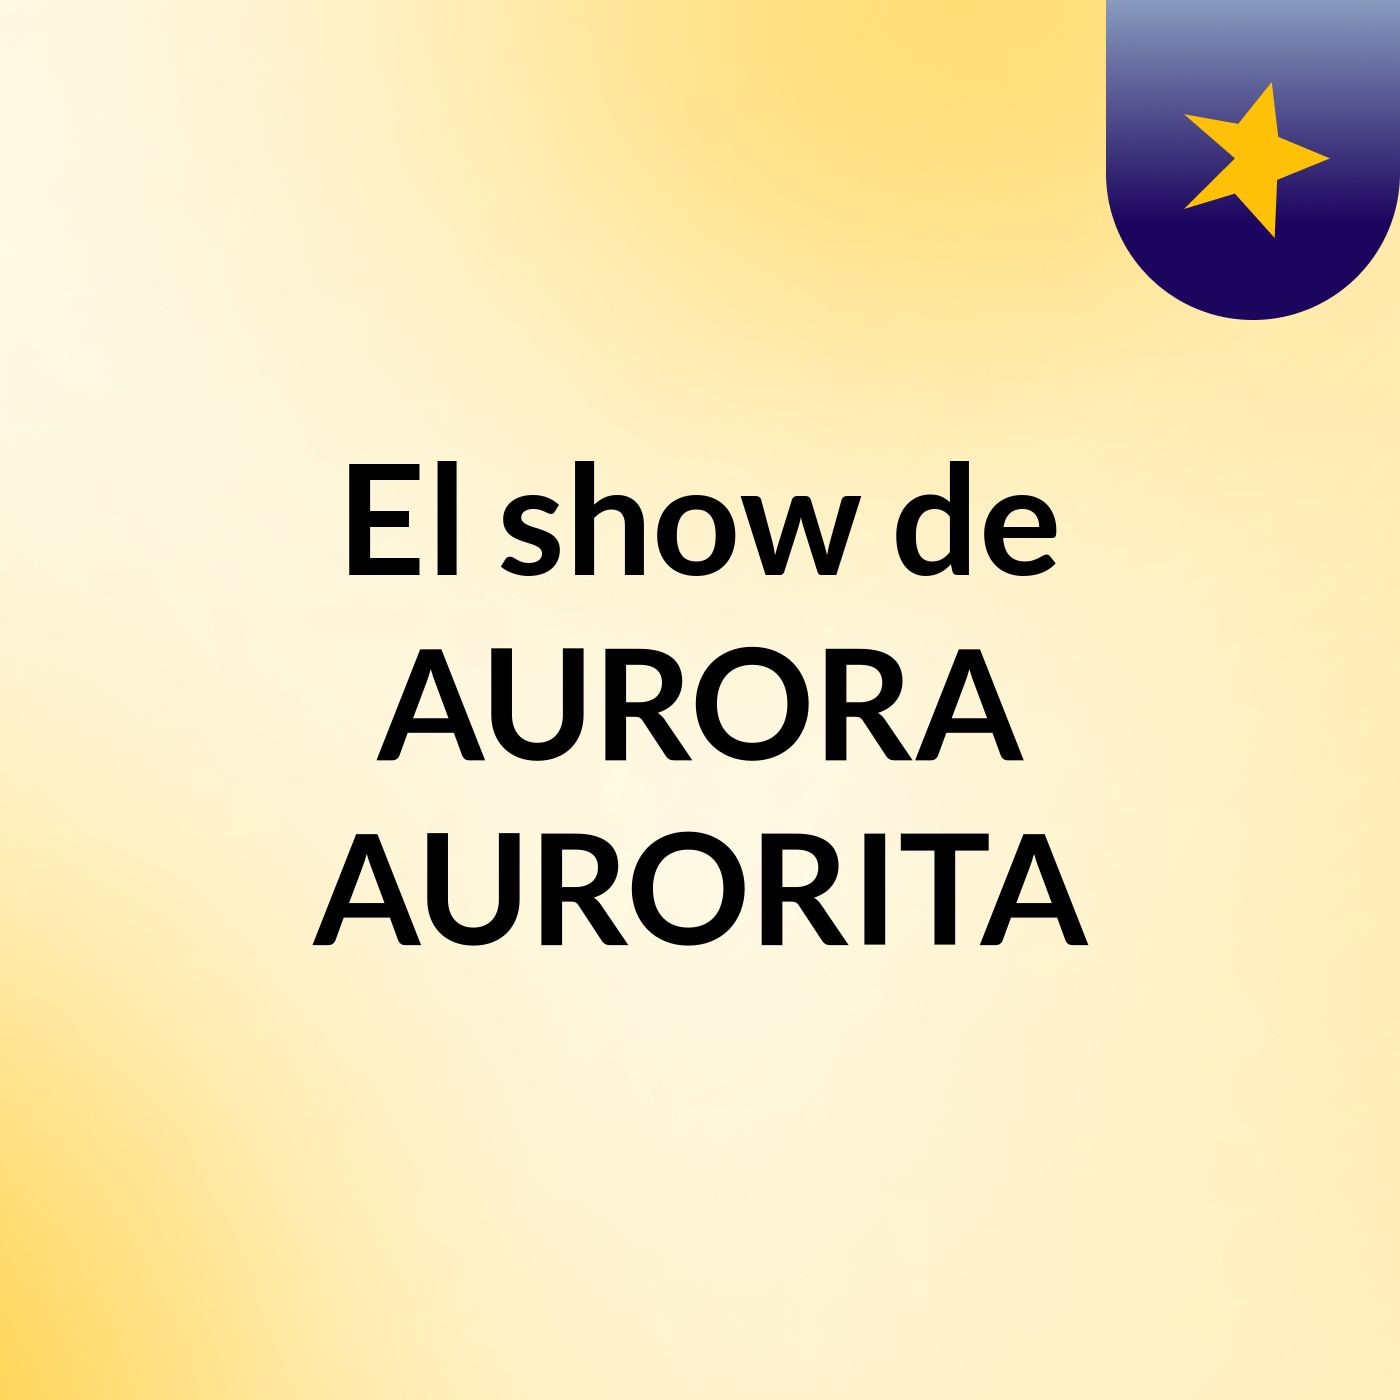 El show de AURORA AURORITA